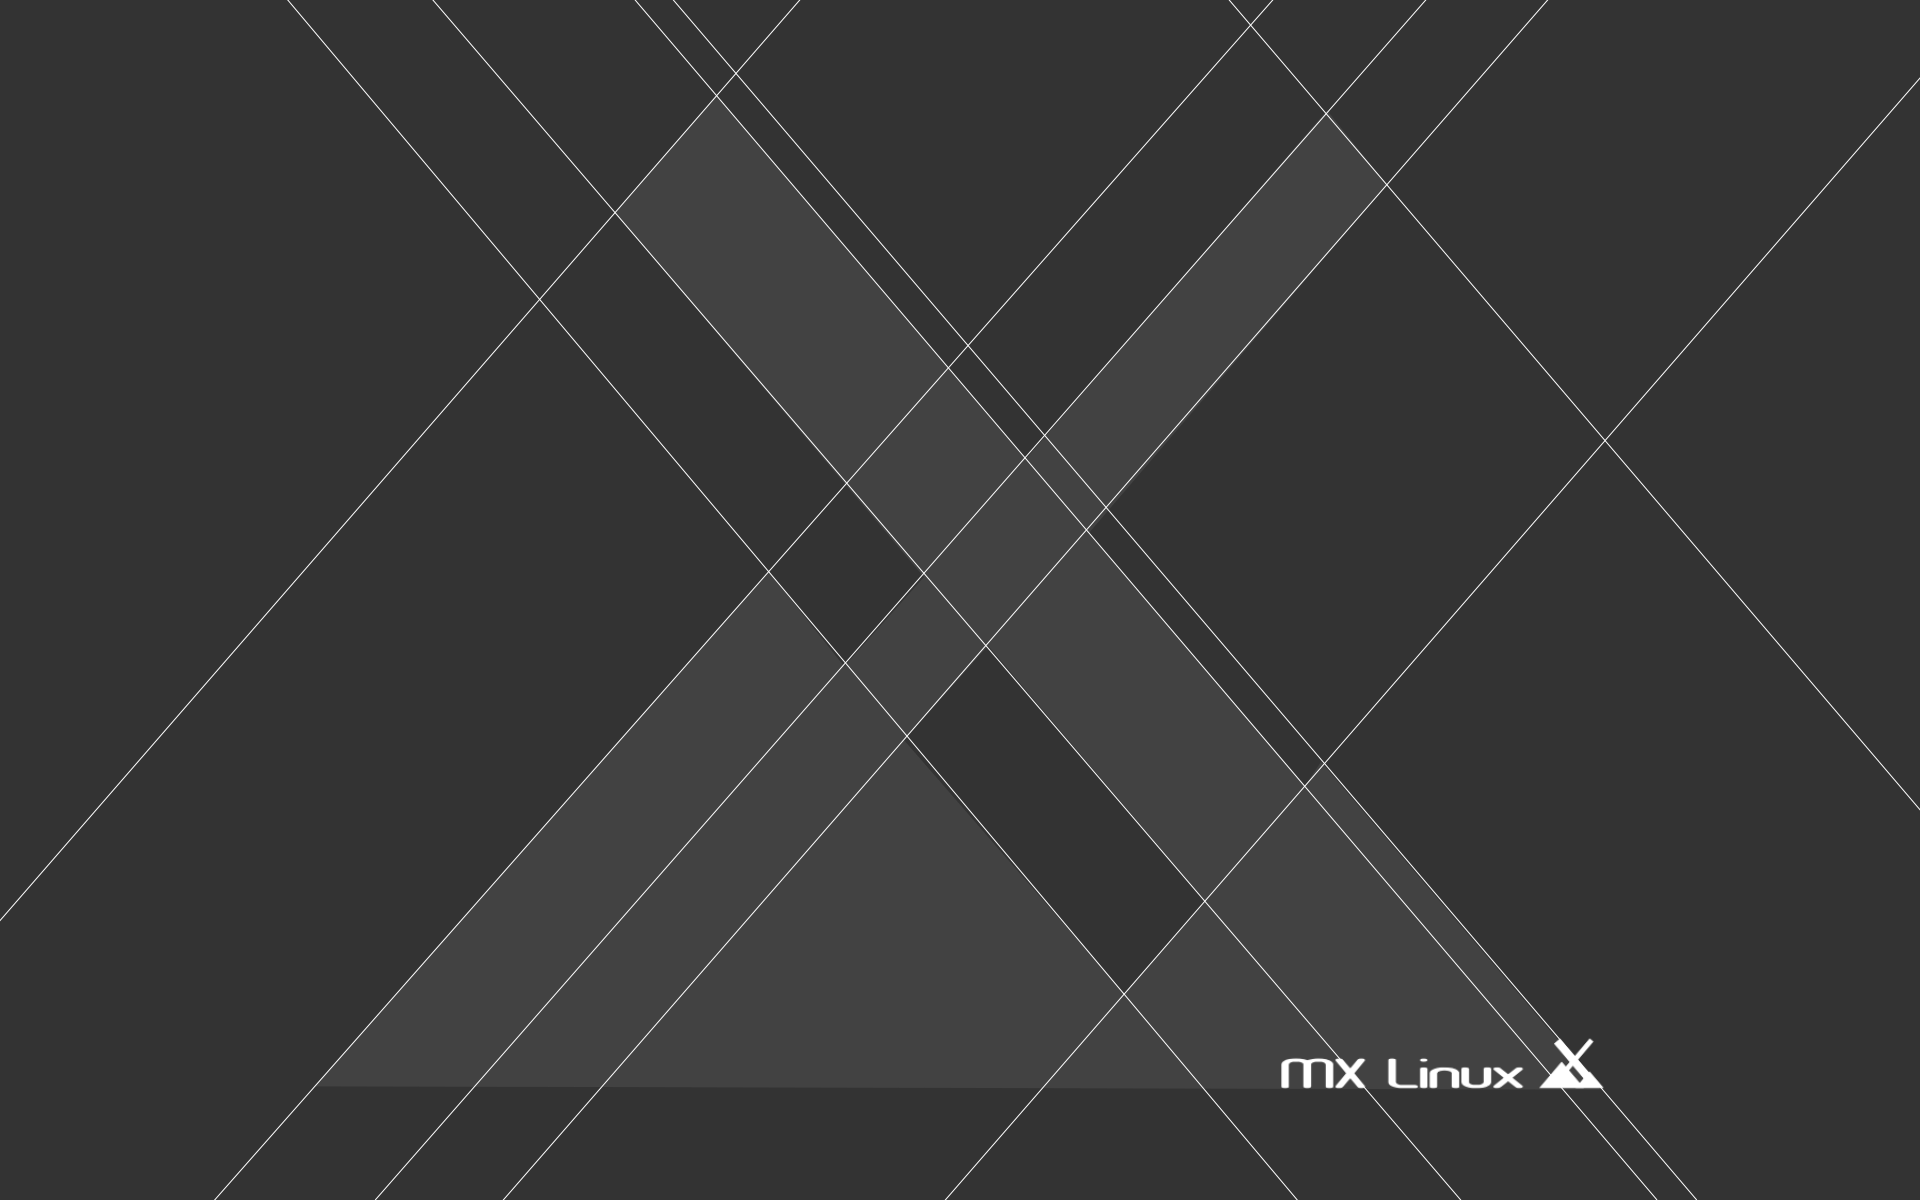 MX Linux Wallpaper Free MX Linux Background